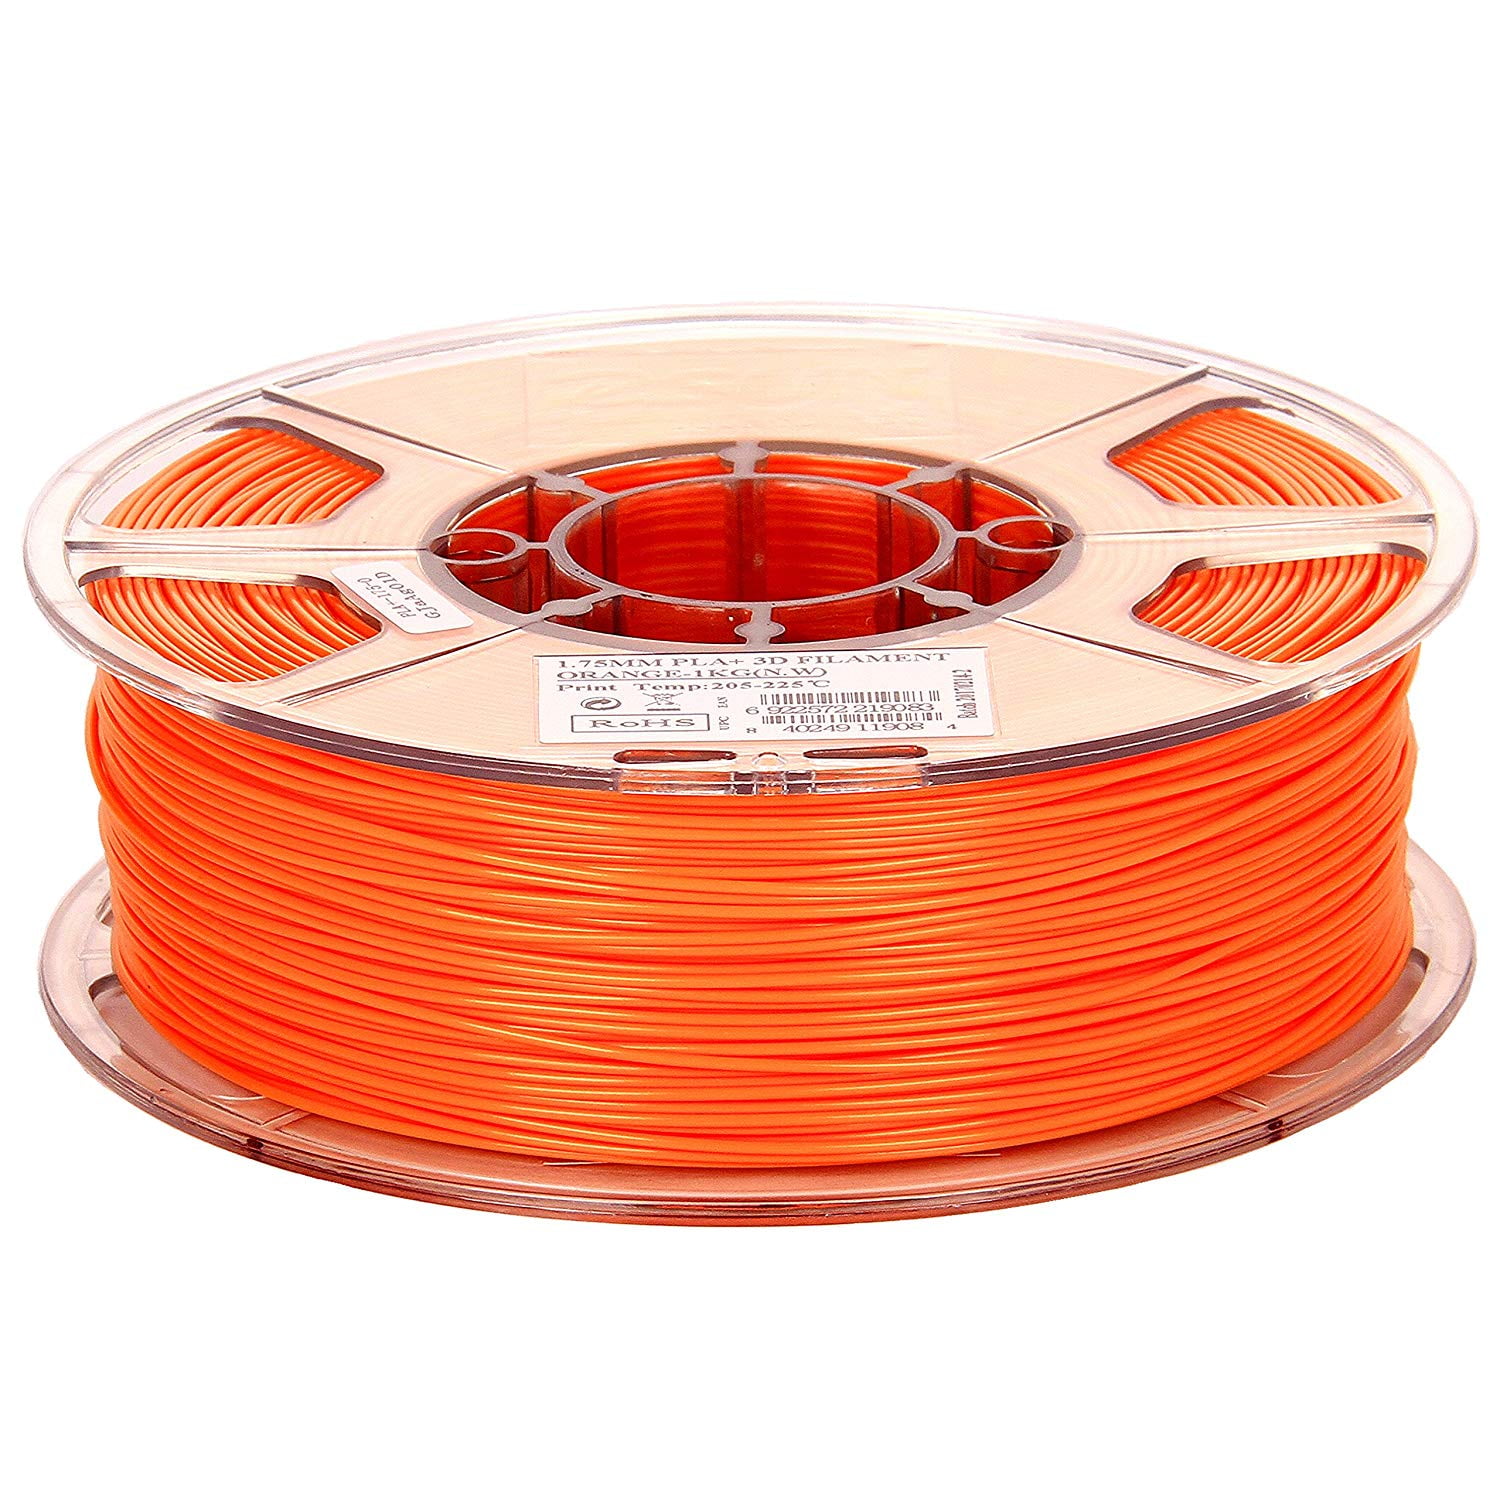 Filament BASF Ultrafuse PLA ORANGE TRANSLUCENT PLA 2.85 mm orange ( translucide) 750 g - Conrad Electronic France